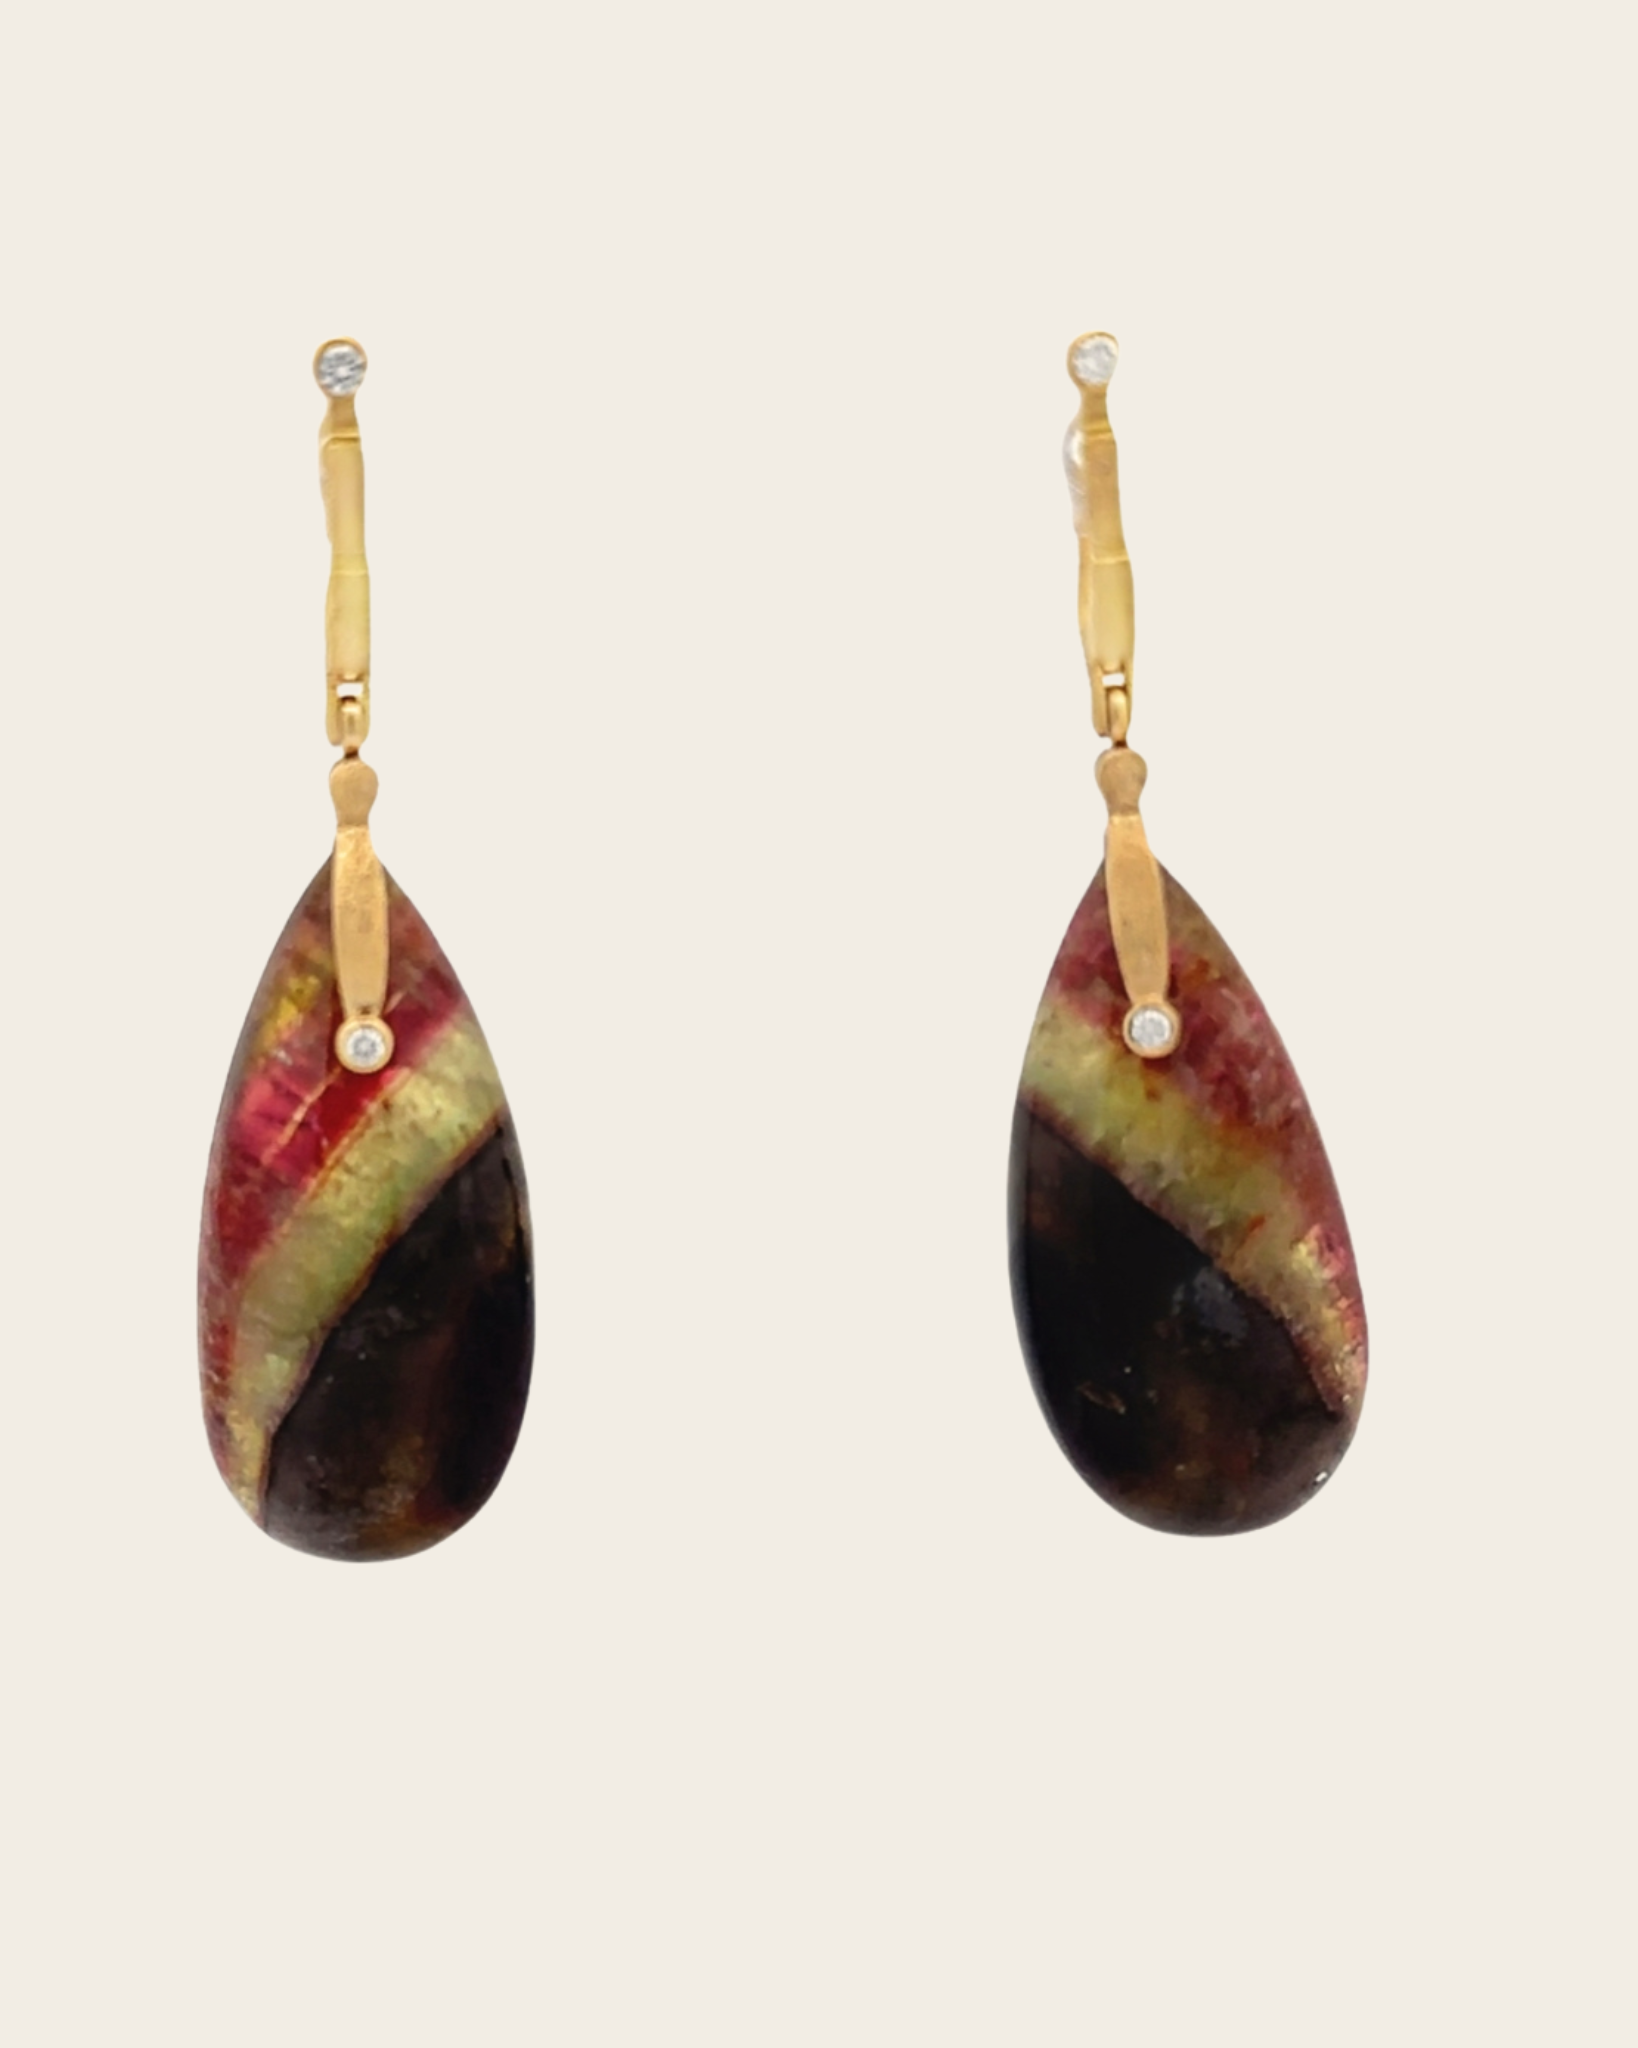 One-of-a-kind bi-color tourmaline drop earrings